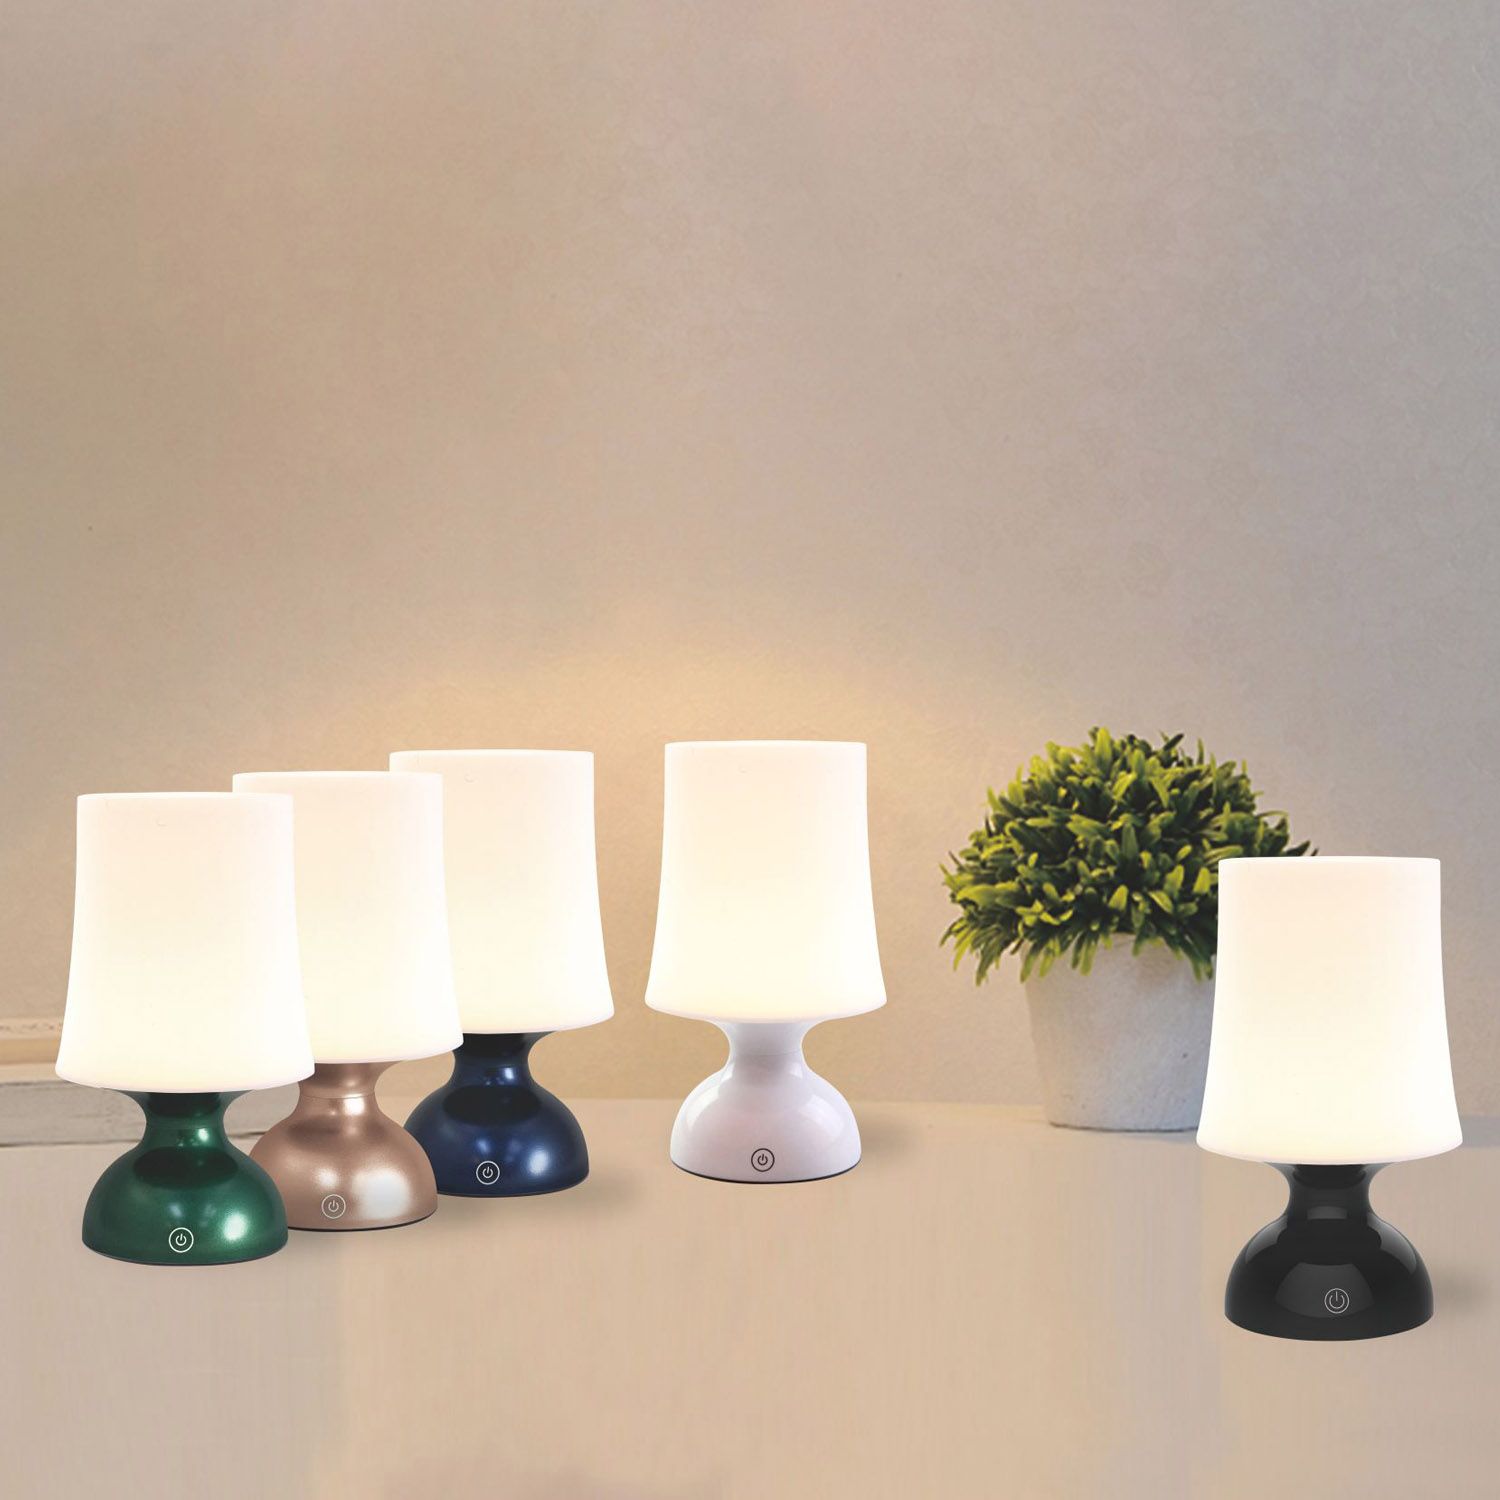 LED Scandinavian Lamp & Minimalist Table Lamp - ETLED-201A. 